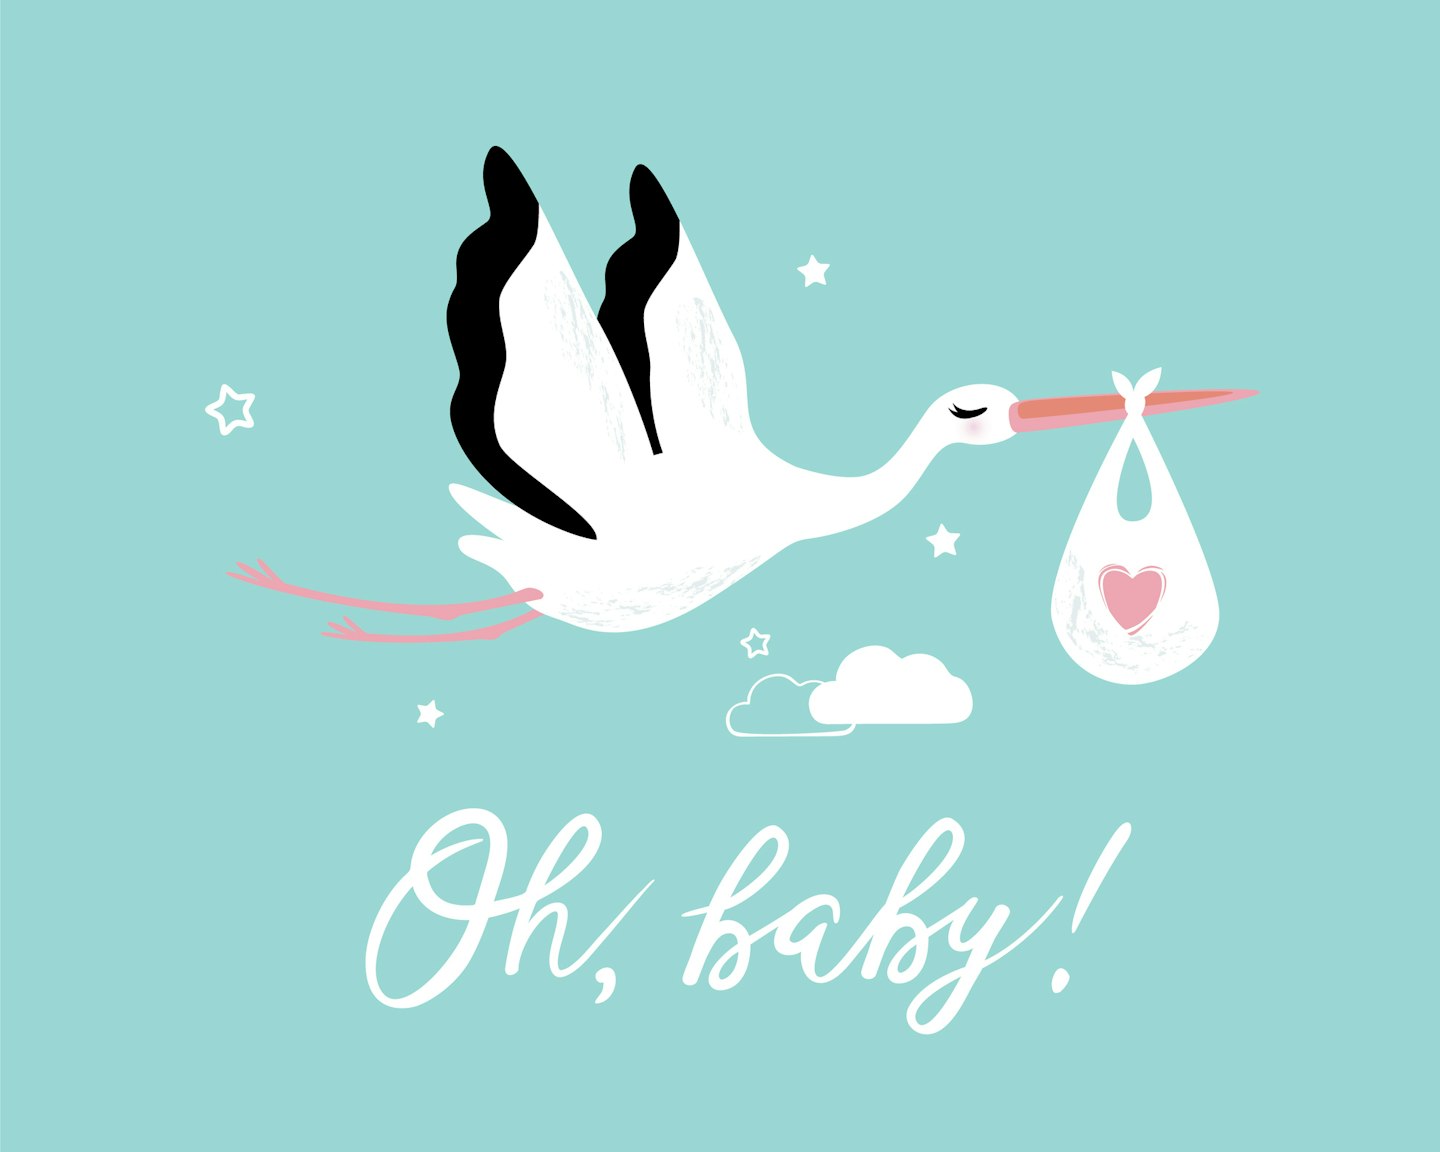 stork carrying newborn